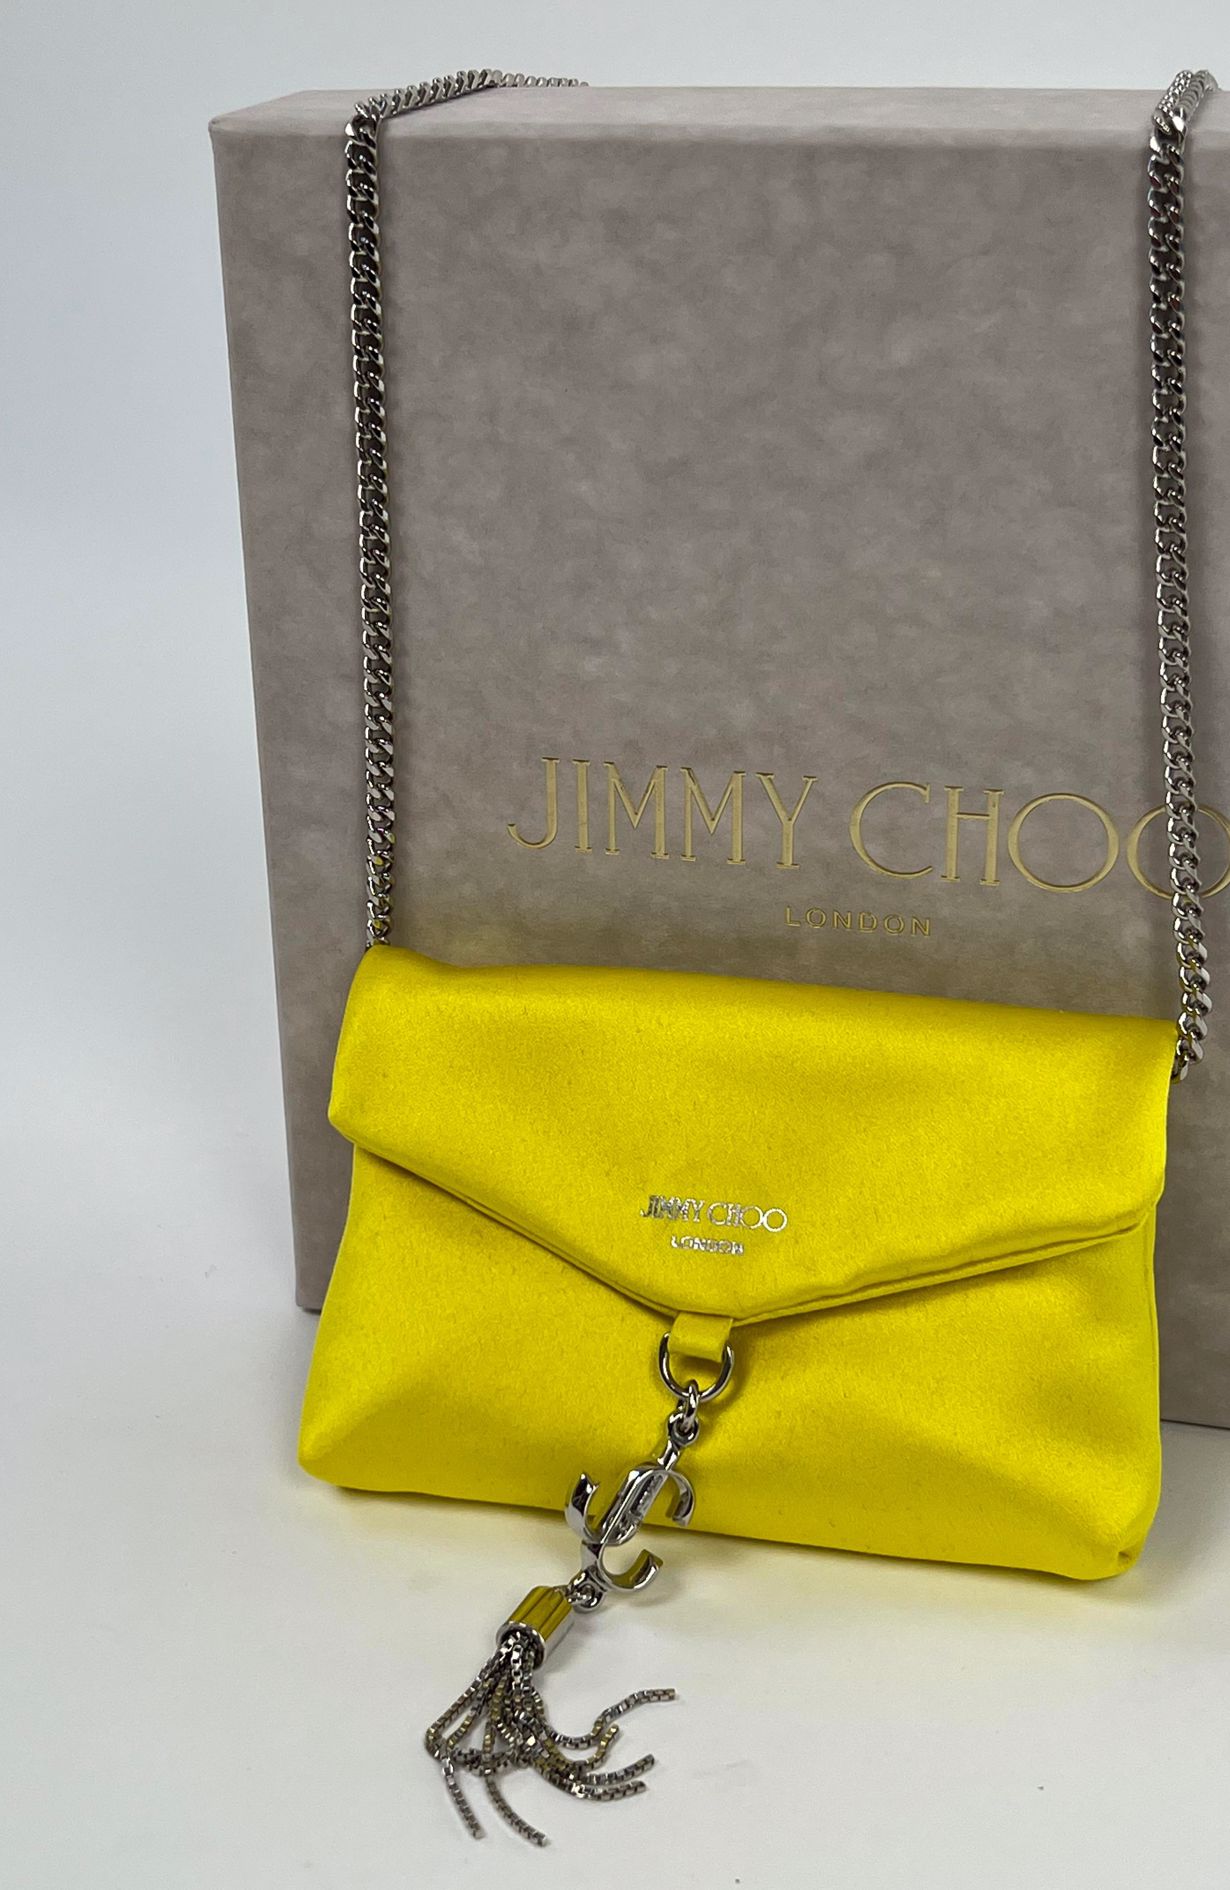 Jimmy Choo cardholder yellow satin +box